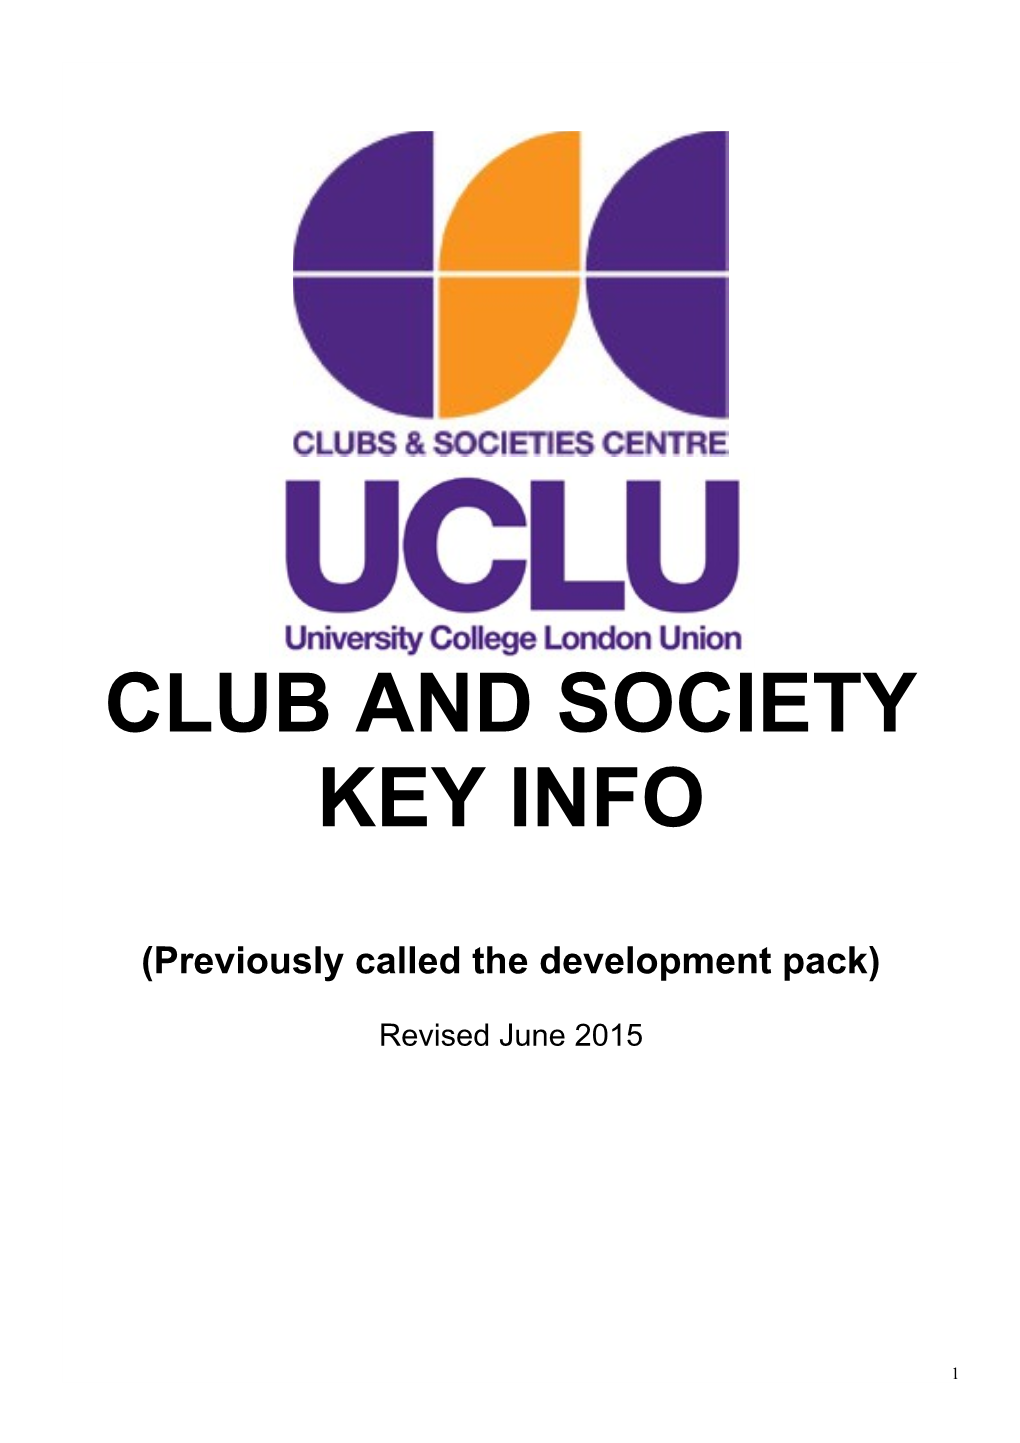 Club and Society Key Info